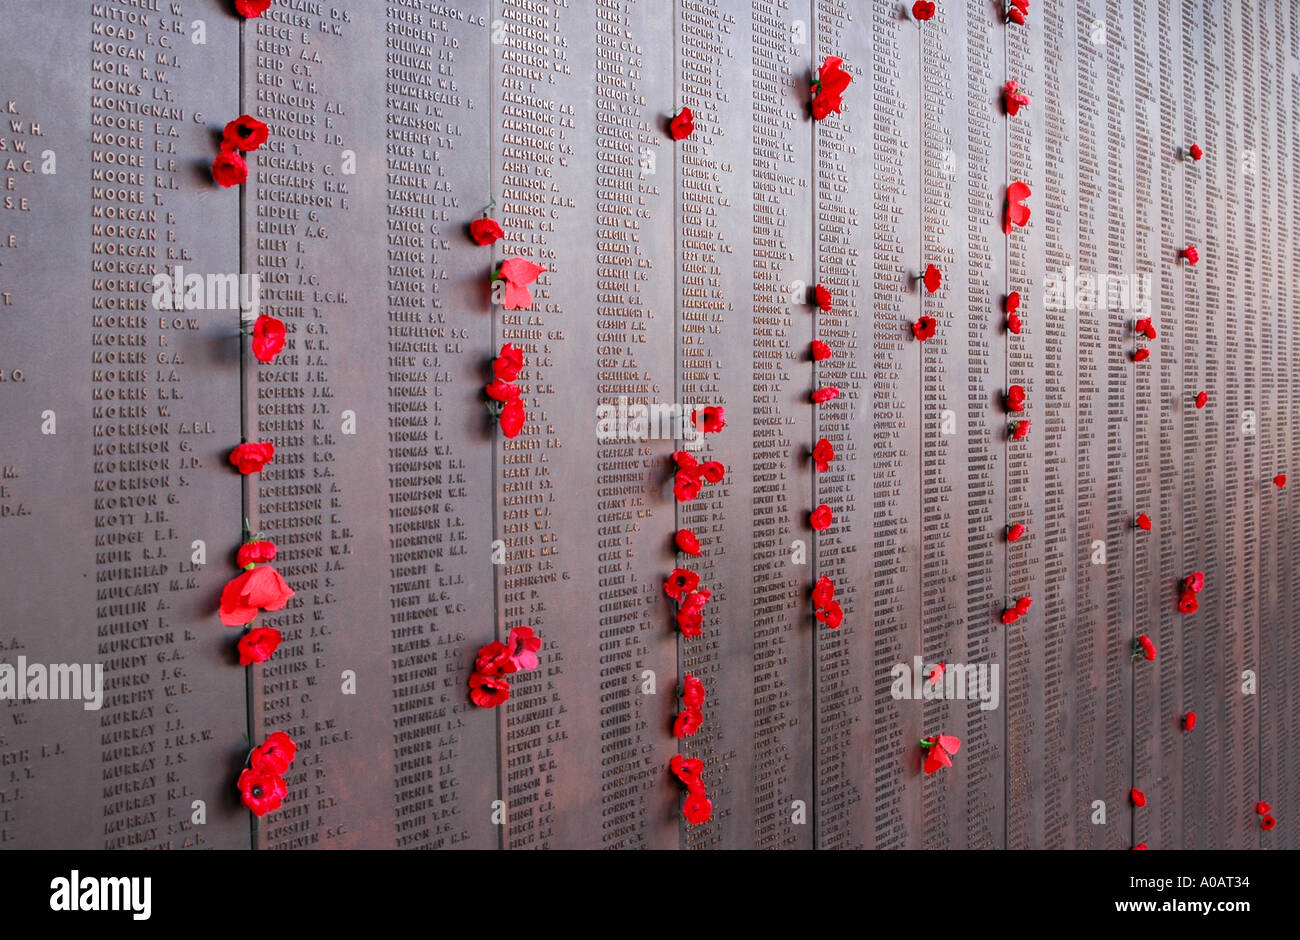 Poppies line the War roll of honor, Australian War Memorial, Canberra, Australia Stock Photo